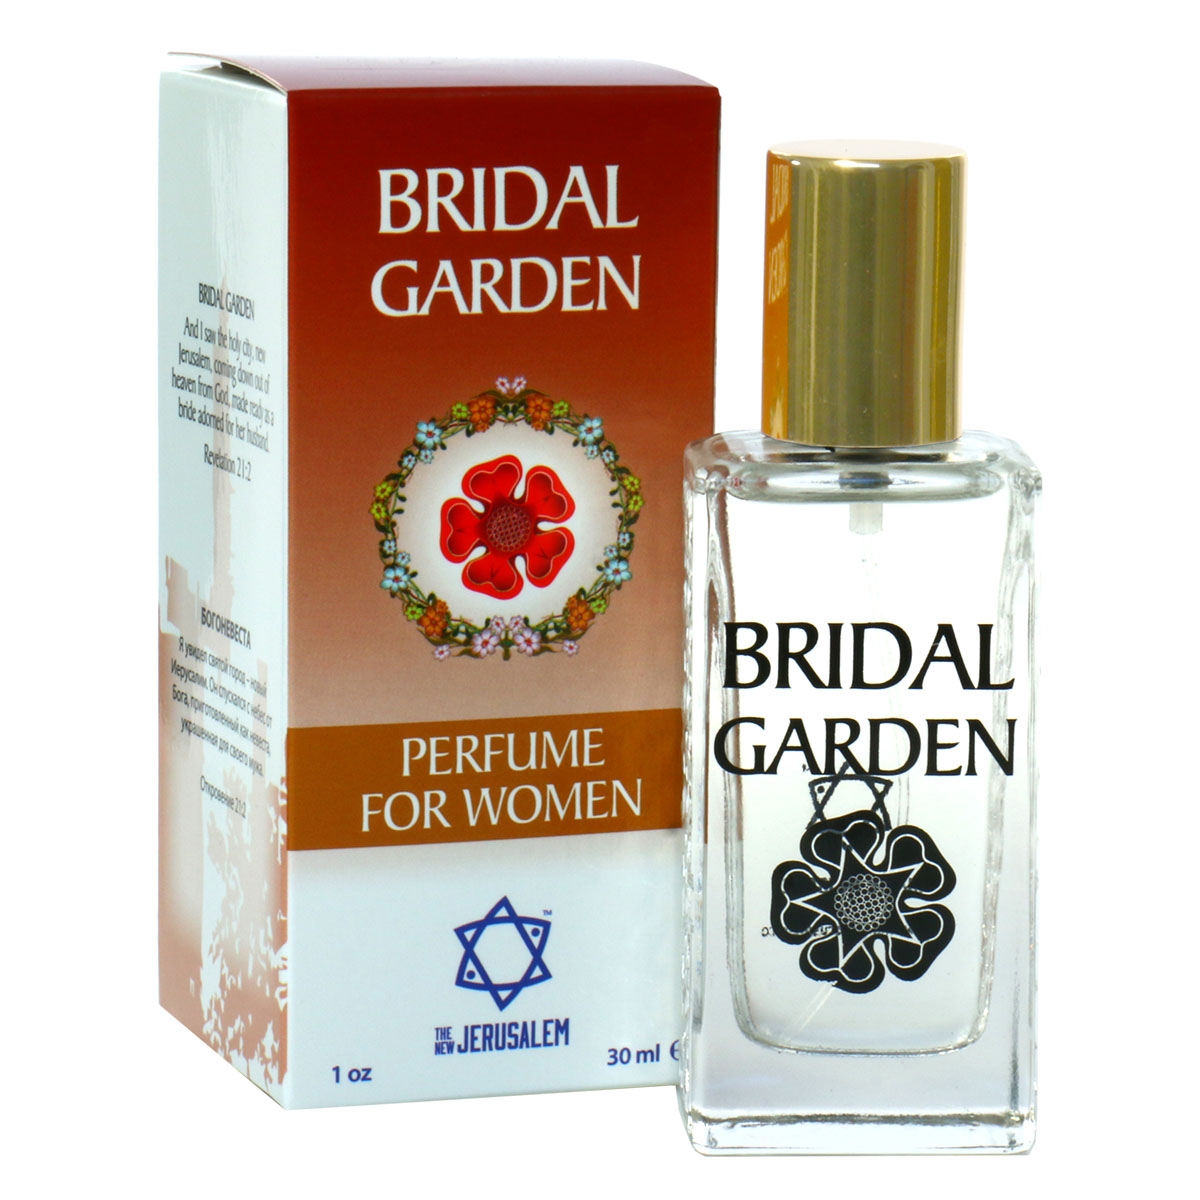 Bridal Garden Perfume for Women - 1